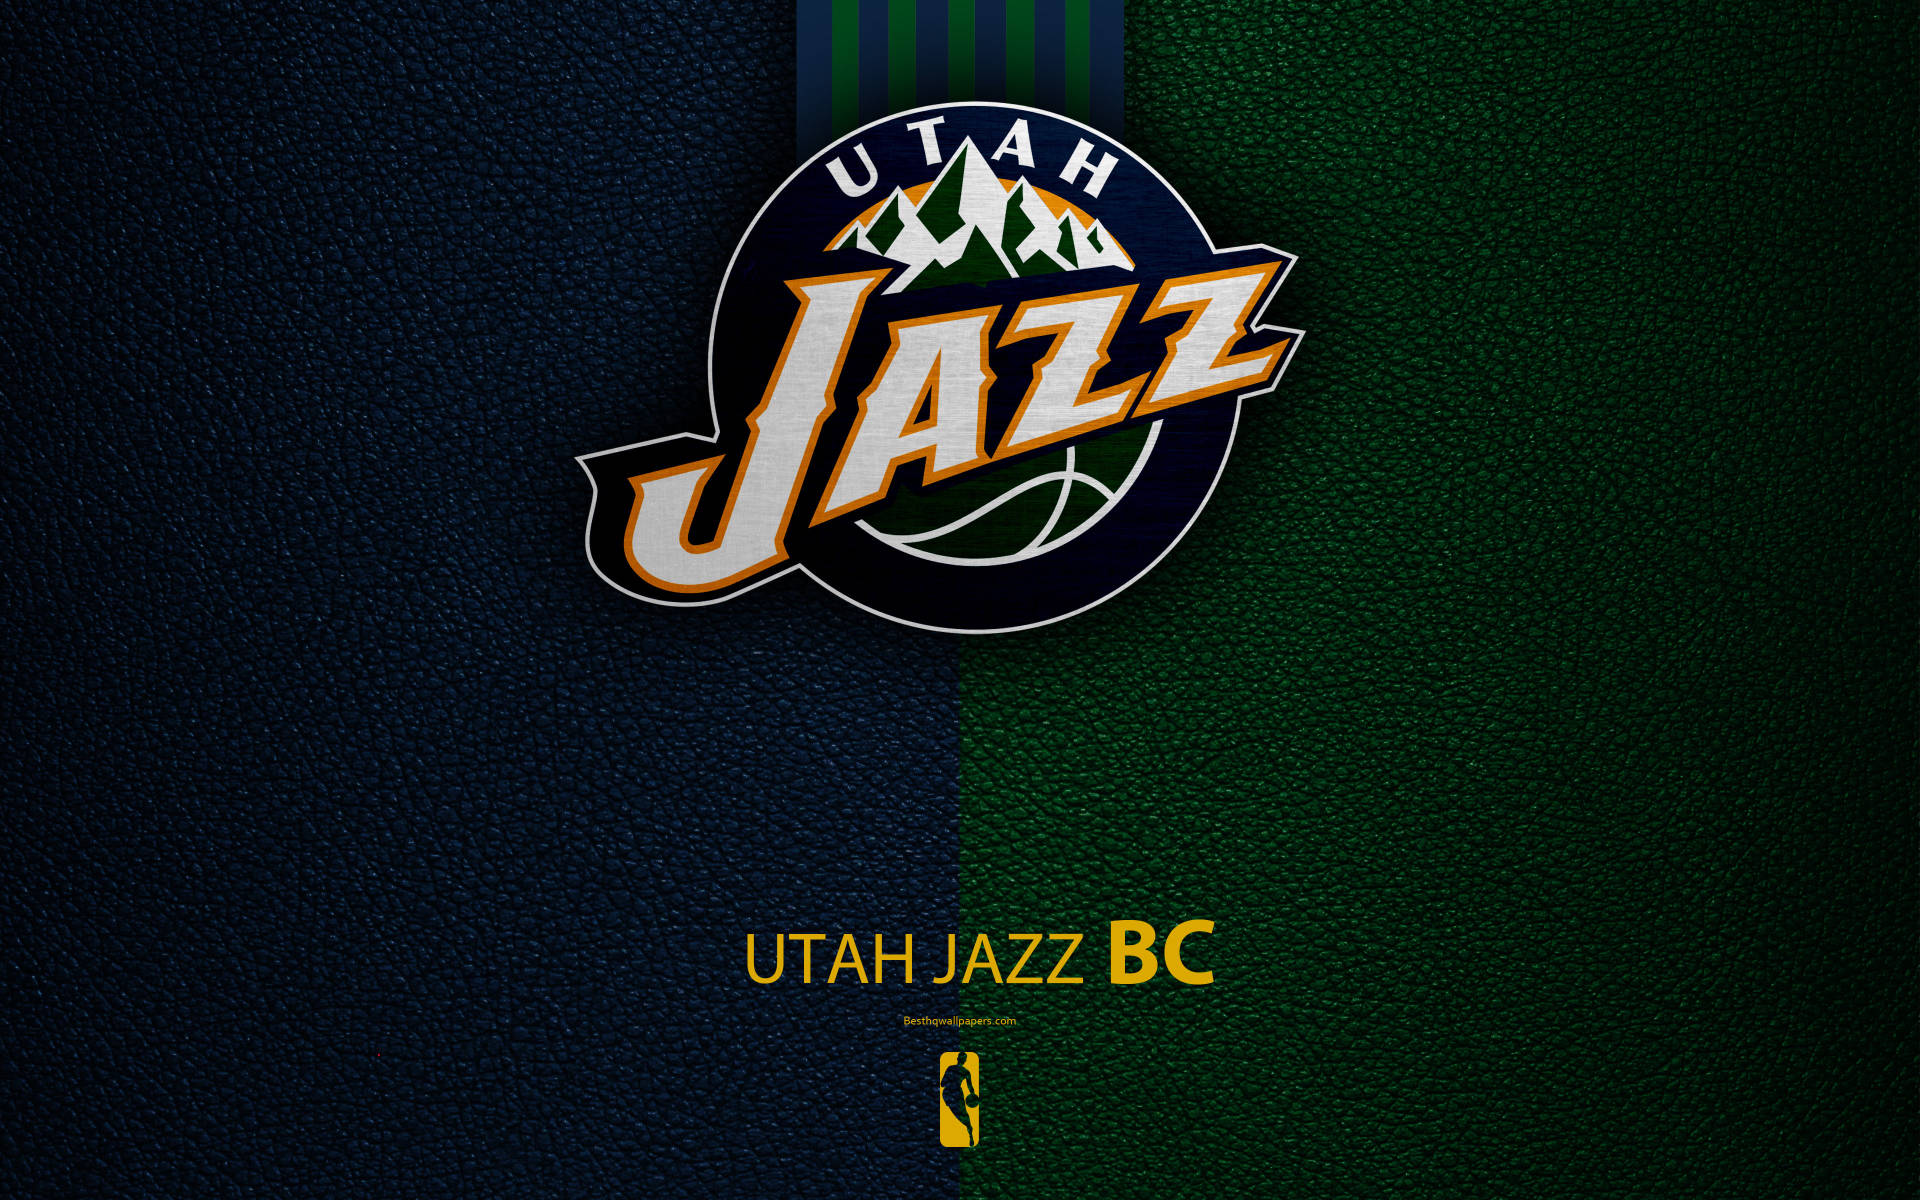 Utah Jazz In Blue And Green